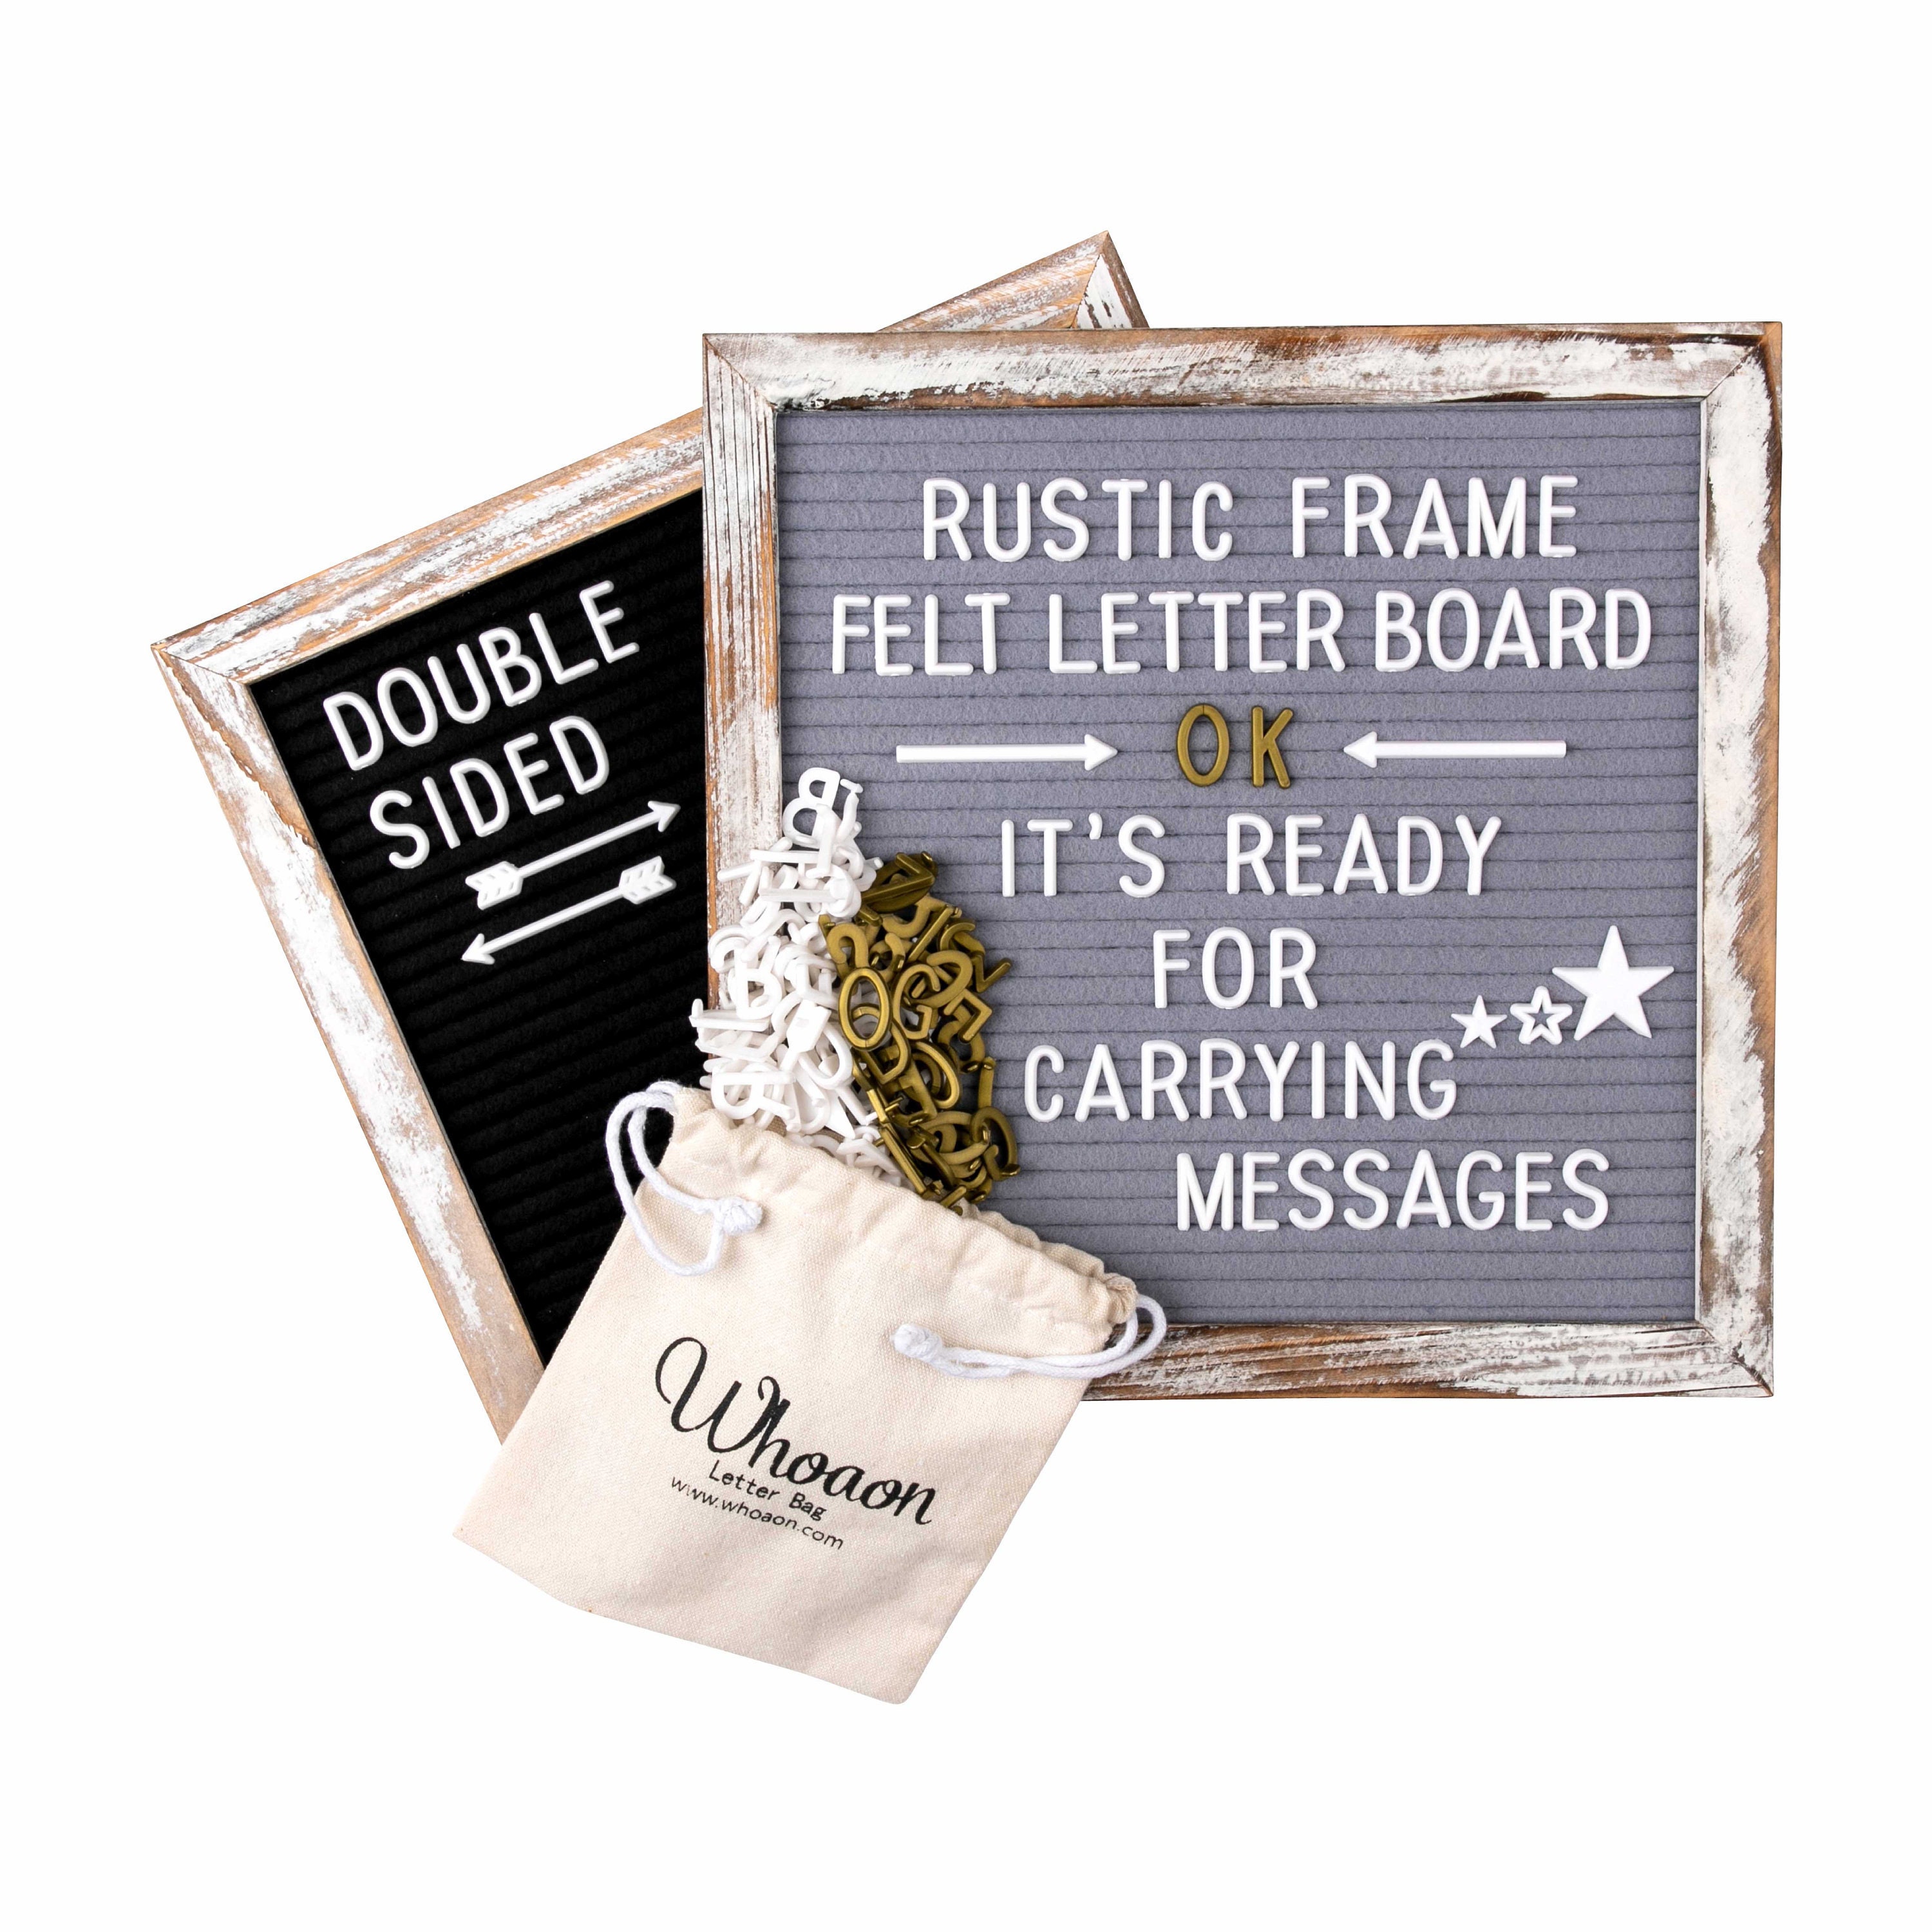 Mesha Rustic Wood Frame Black Felt Letter Board,Changeable Letter Board,484 Precut Letters,Symbols,Emojis Additional Months&Week,Double Sided Letter Board&Chalkboard,Display U Want to Express,10x10In 